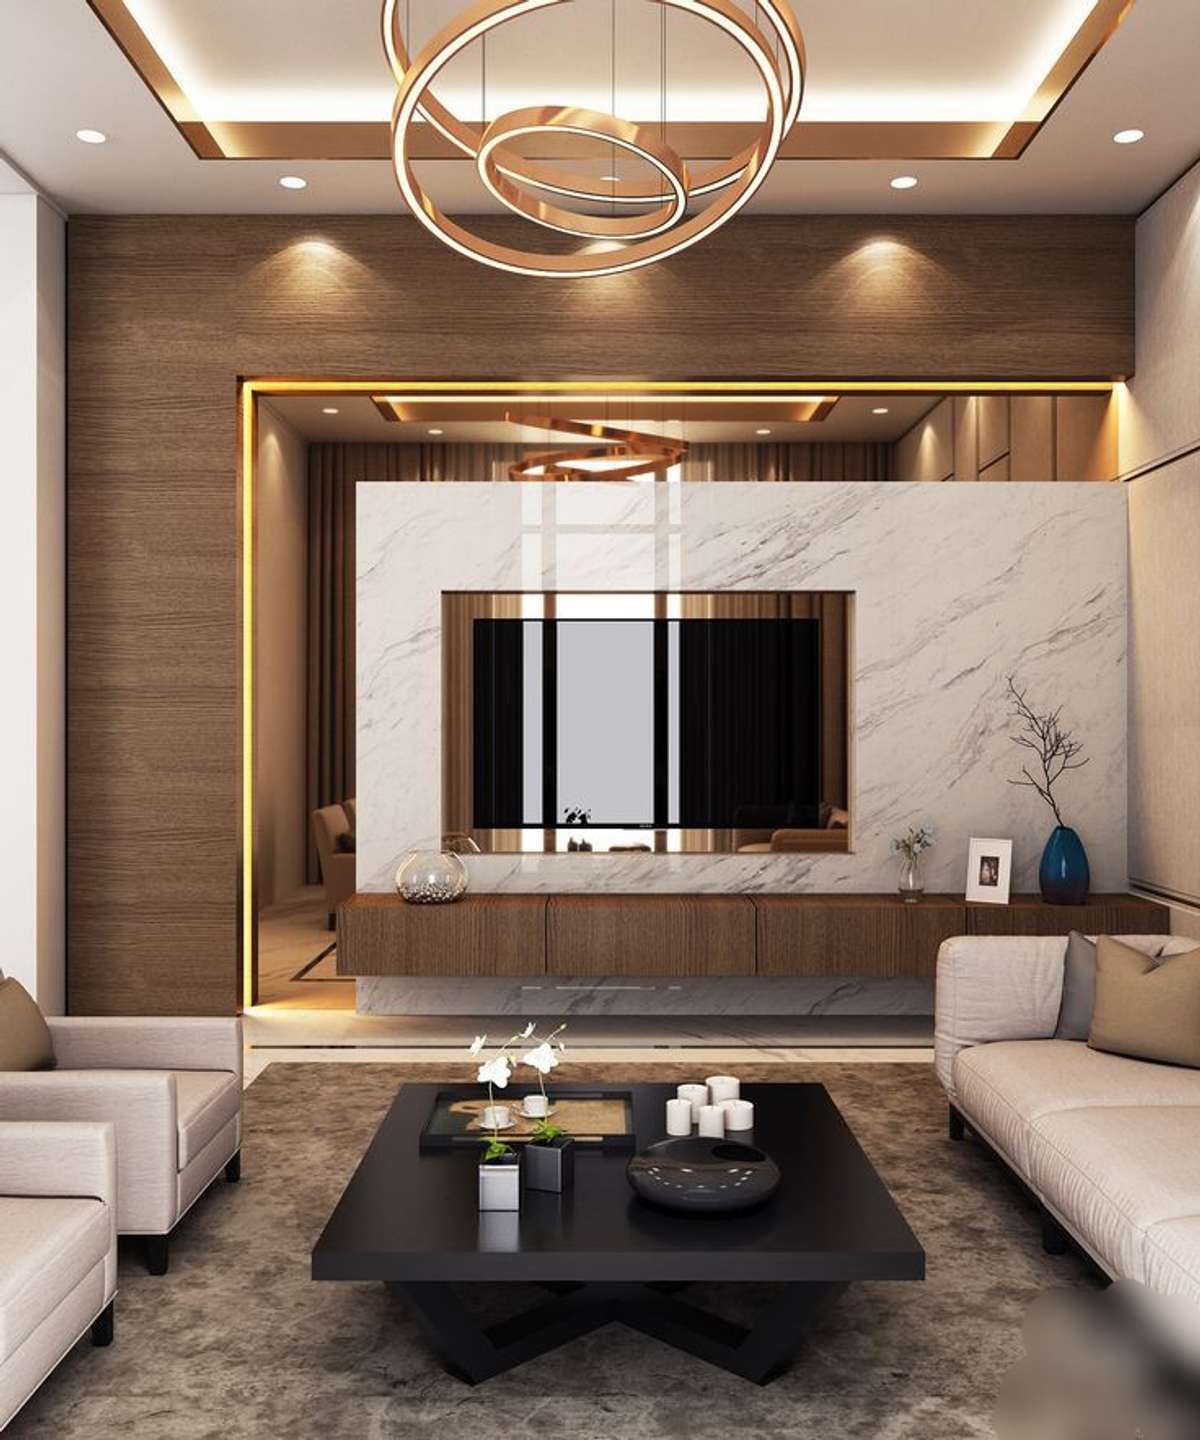 TV unit with golden paneling
.
.
.
#tvunit #wooden #gold #colourful #design #interior #InteriorDesigner #WindowsIdeas #IndoorPlants #Mattresses #sofa #LivingroomDesigns #i&c #Veneer